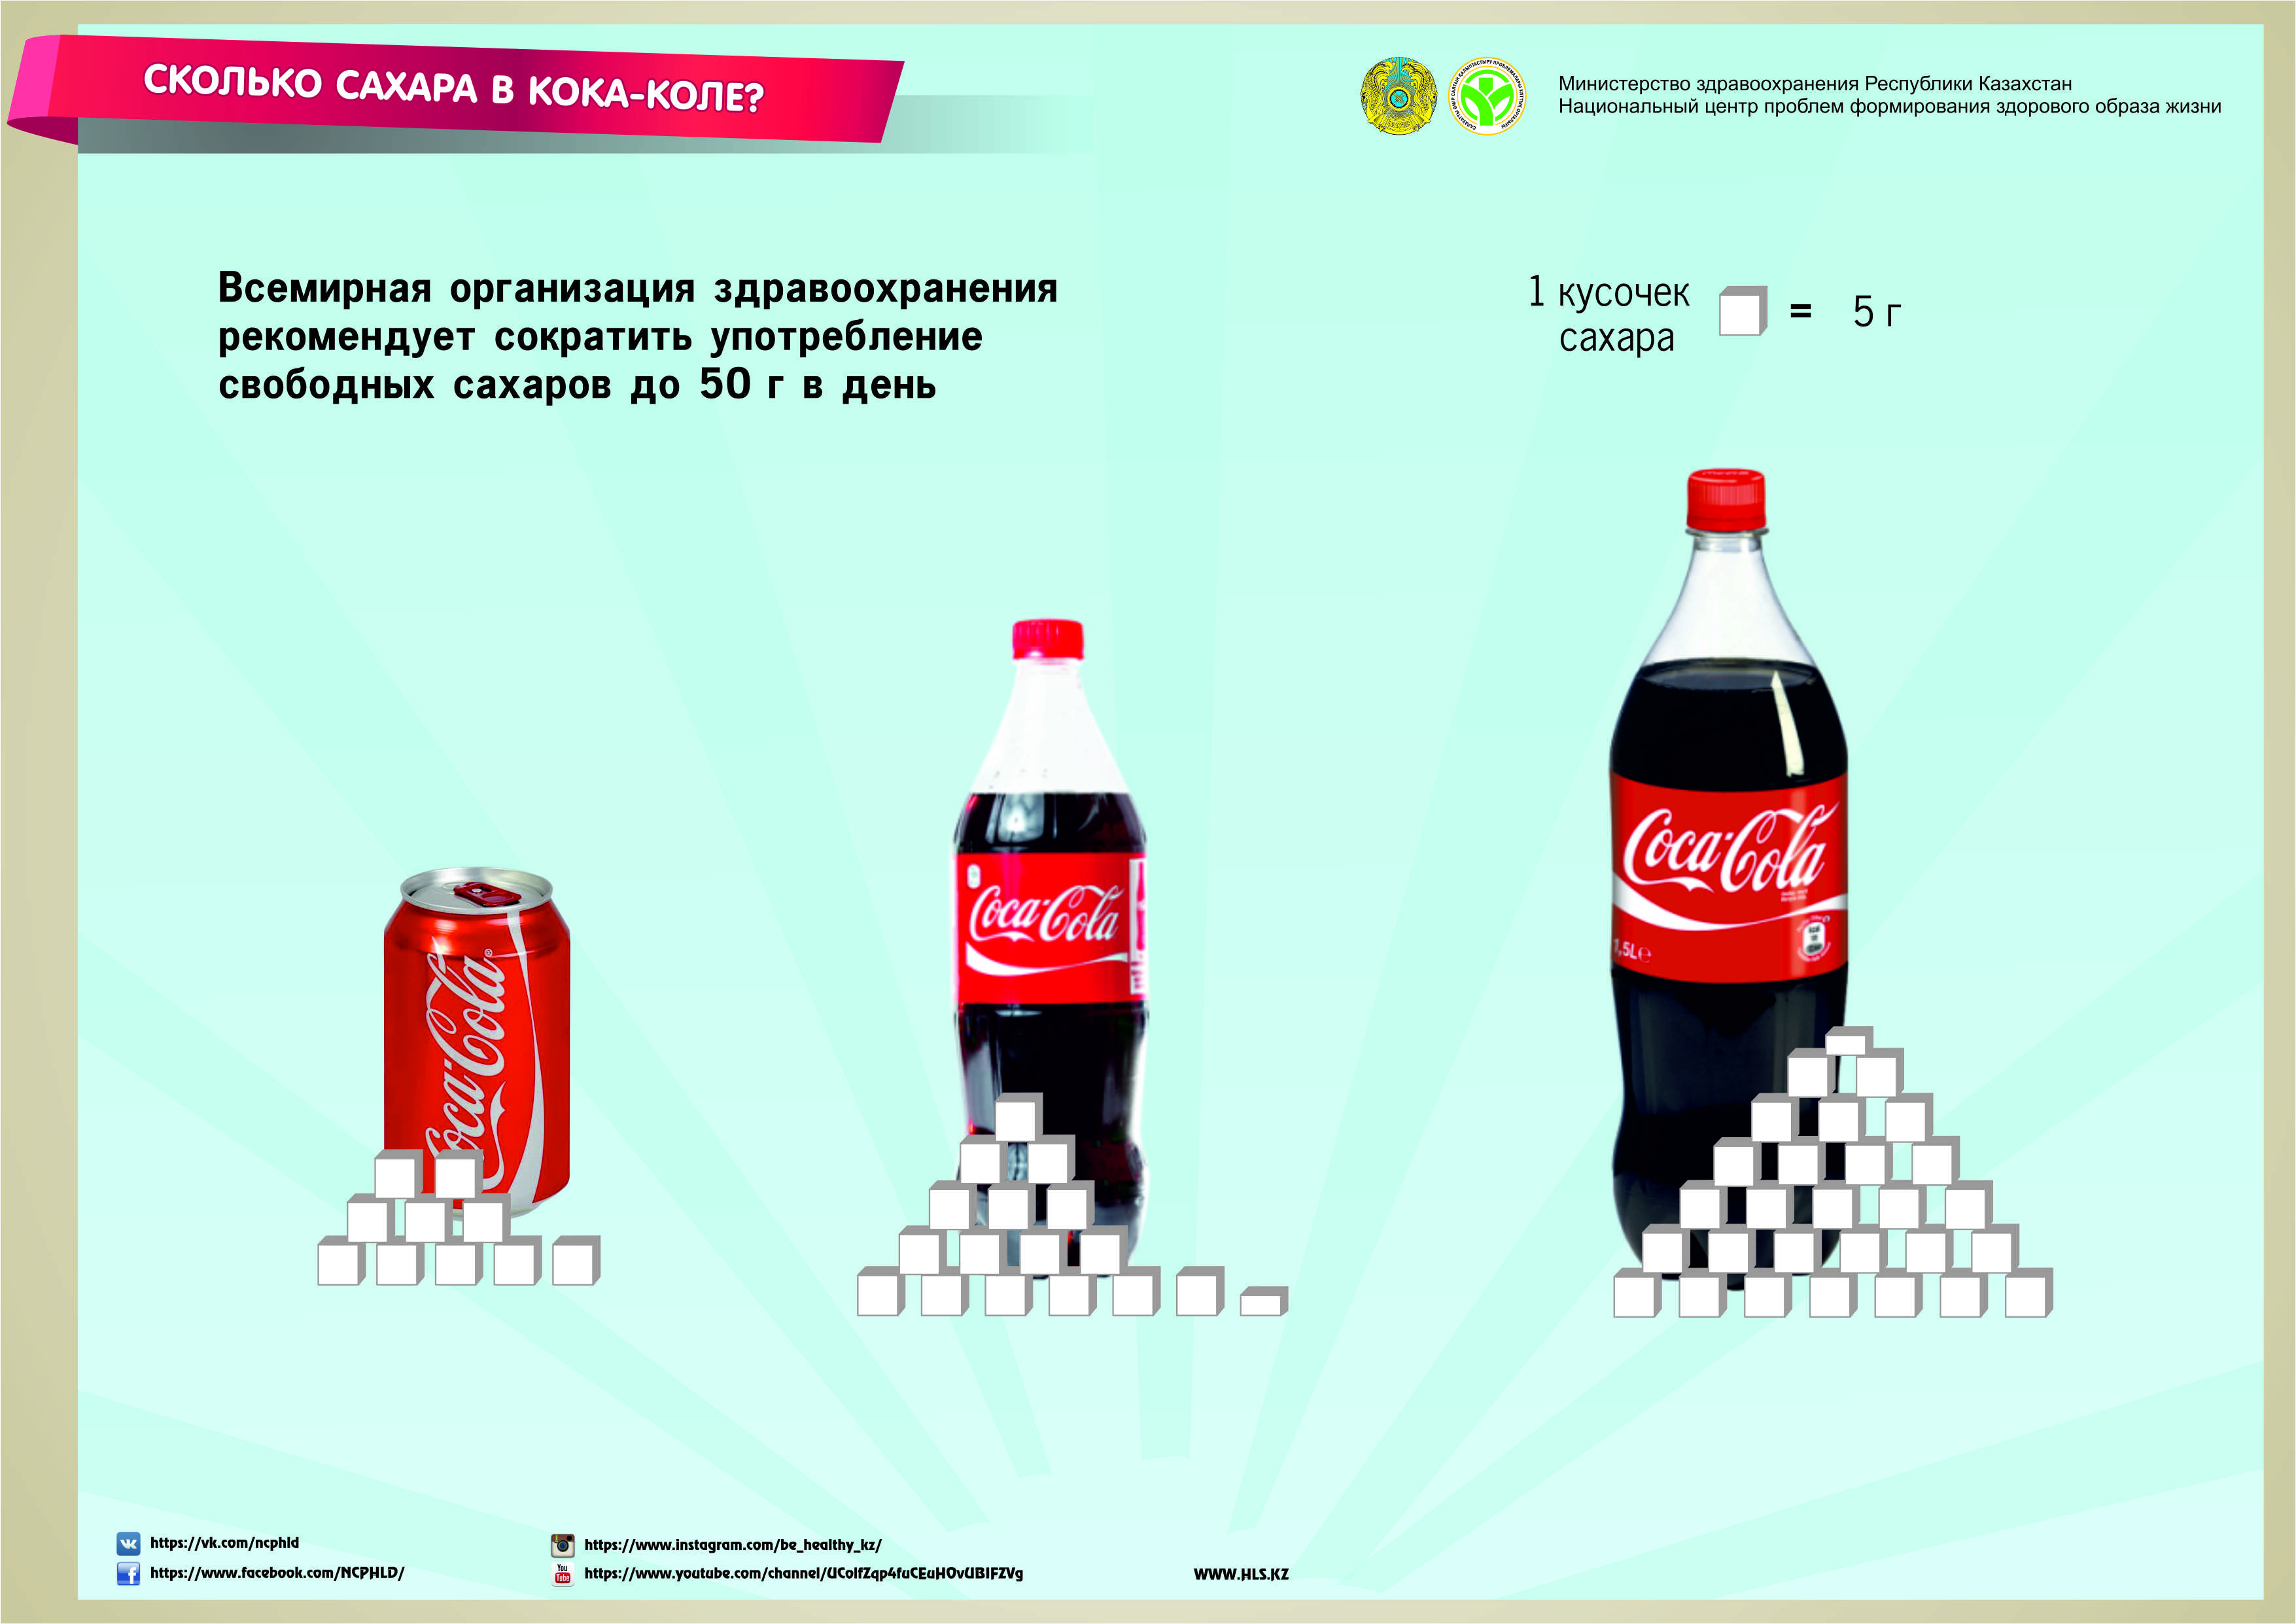 Сколько грамм в коле. Сколько сахара в 1 литре Кока колы. Содержание сахара в Кока Коле 0.5. Сколько сахара содержится в Кока Коле 1 литр. Кока кола содержание сахара 2 литра.